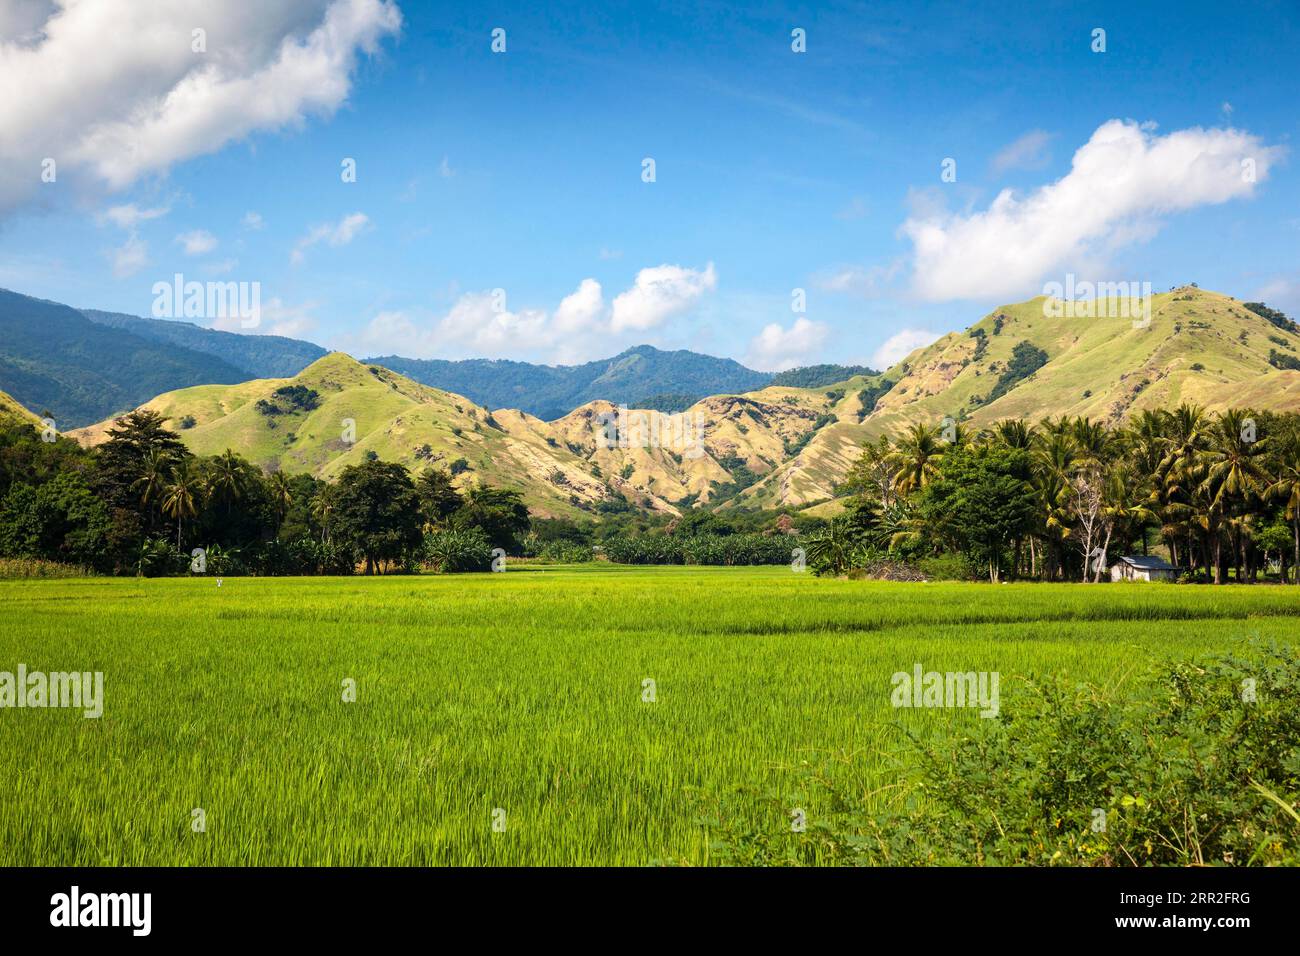 Rice fields and mountains, Flores, Nusa Tenggara Timur, Indonesia Stock Photo